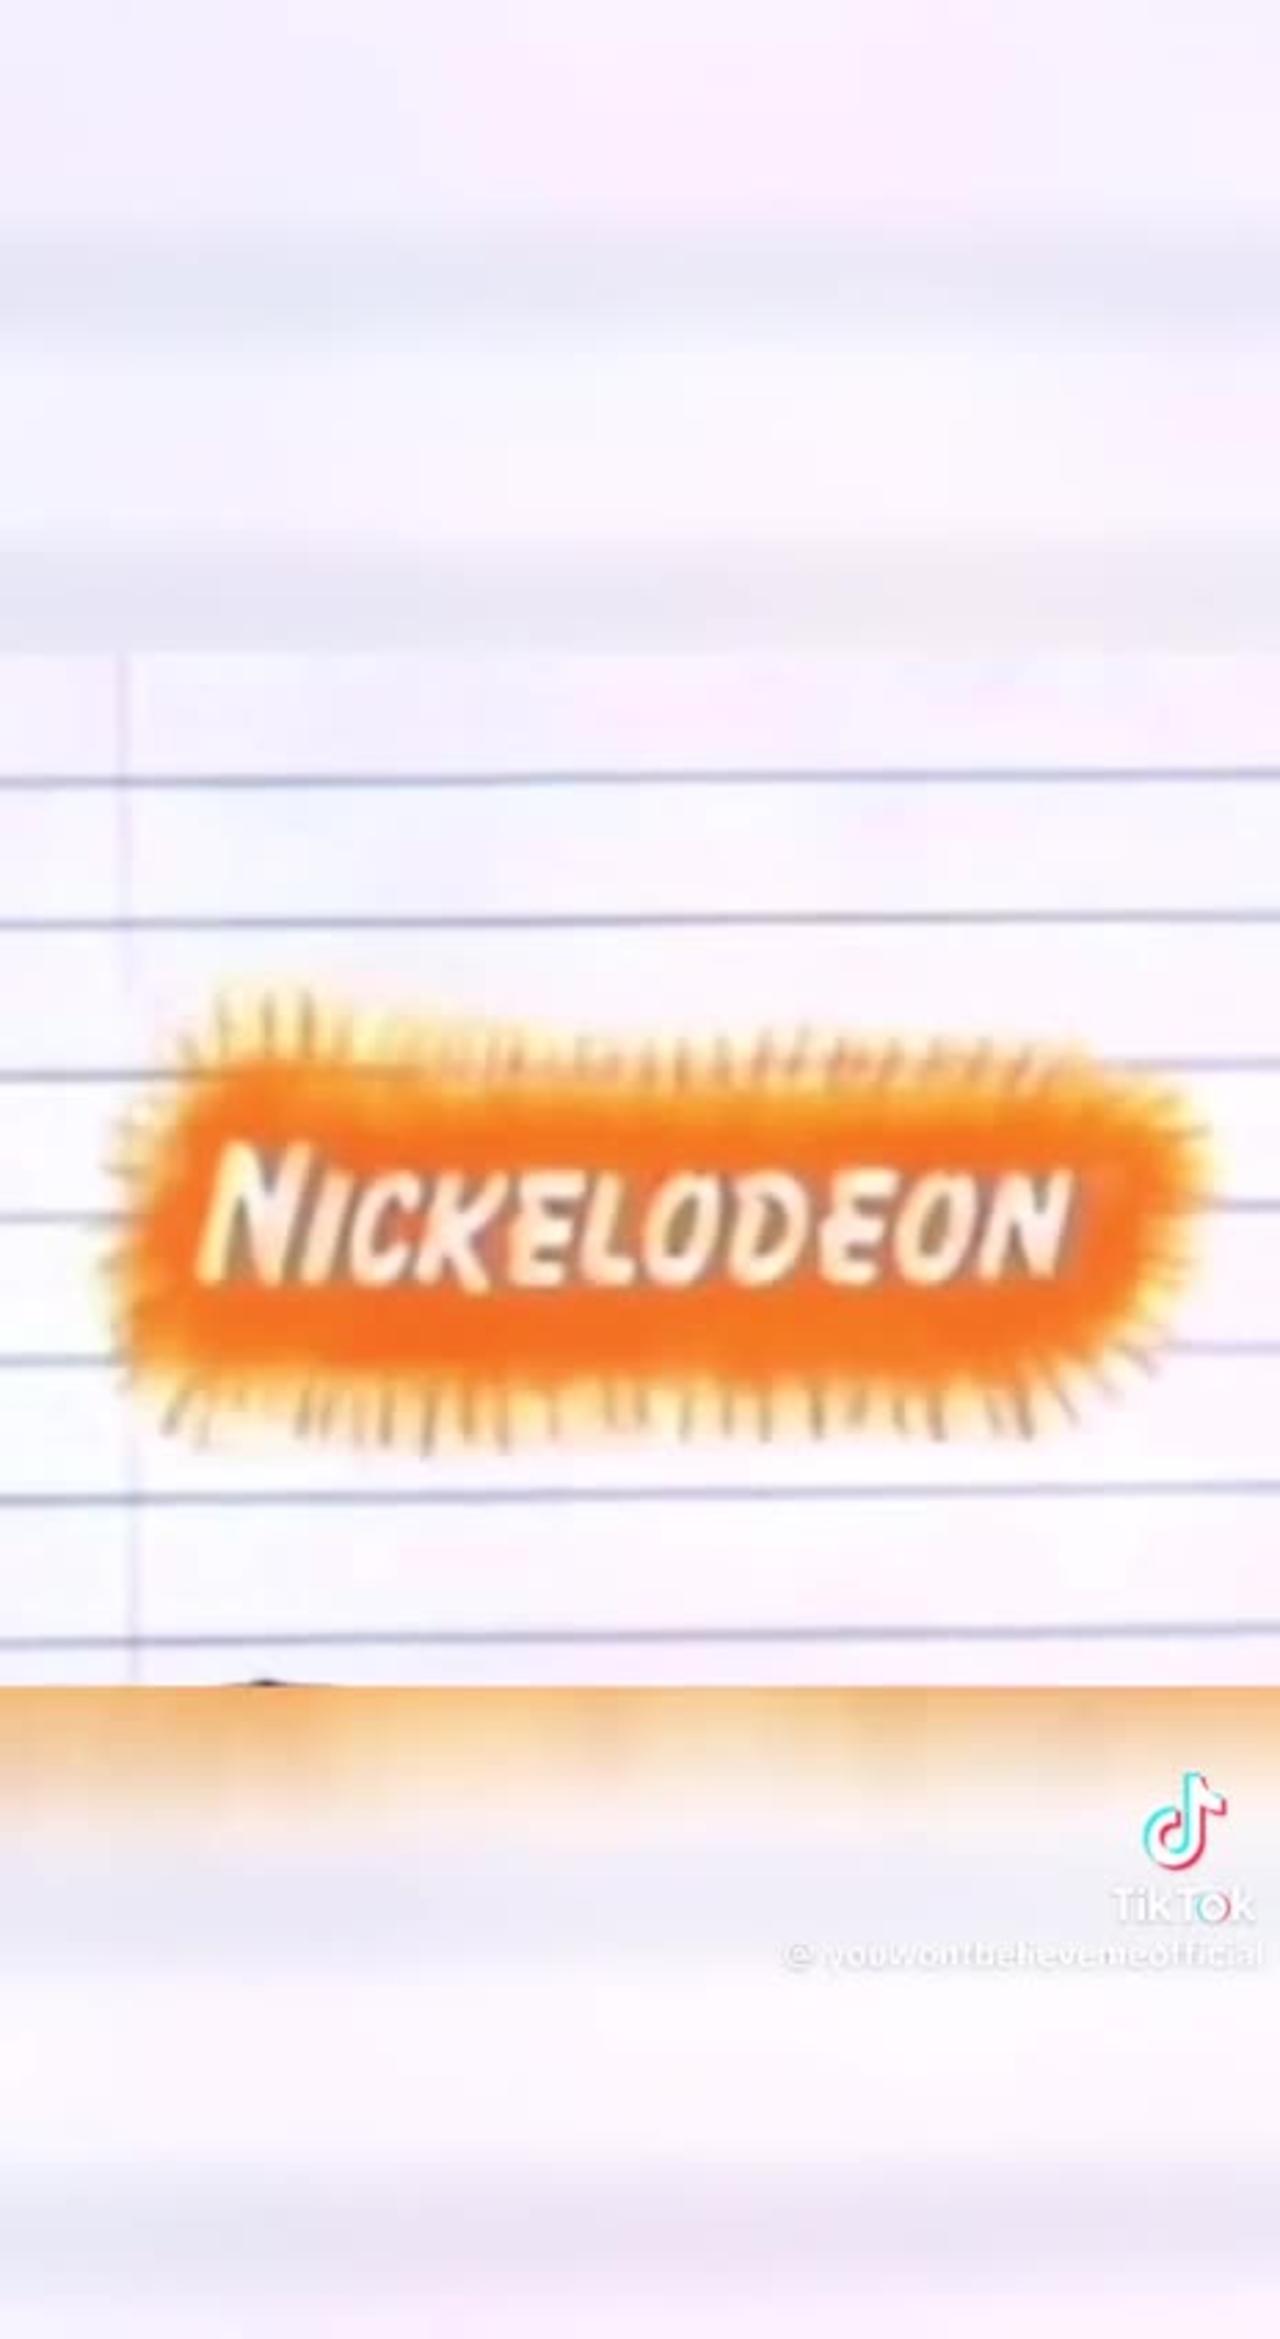 Nickelodeon - Satanic Subliminal Mind-Programming for Children